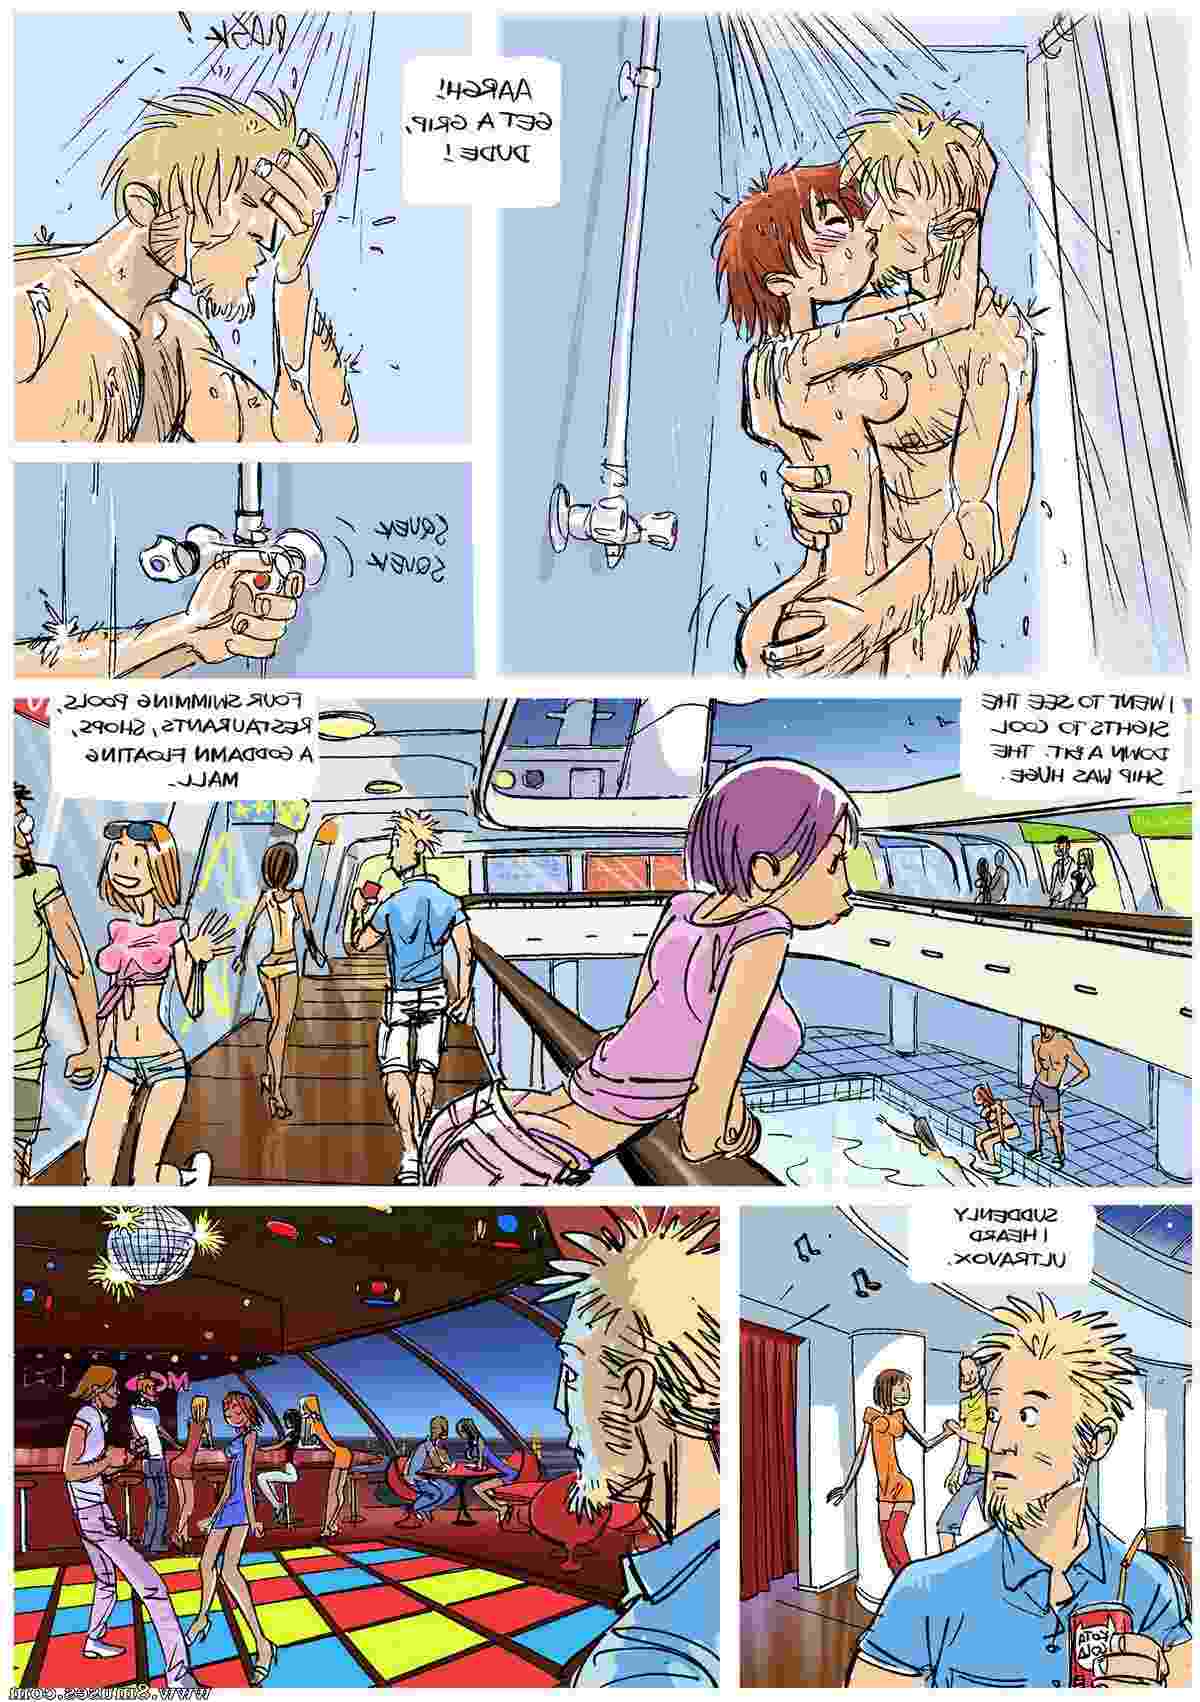 Slipshine-Comics/Lust-Boat Lust_Boat__8muses_-_Sex_and_Porn_Comics_8.jpg